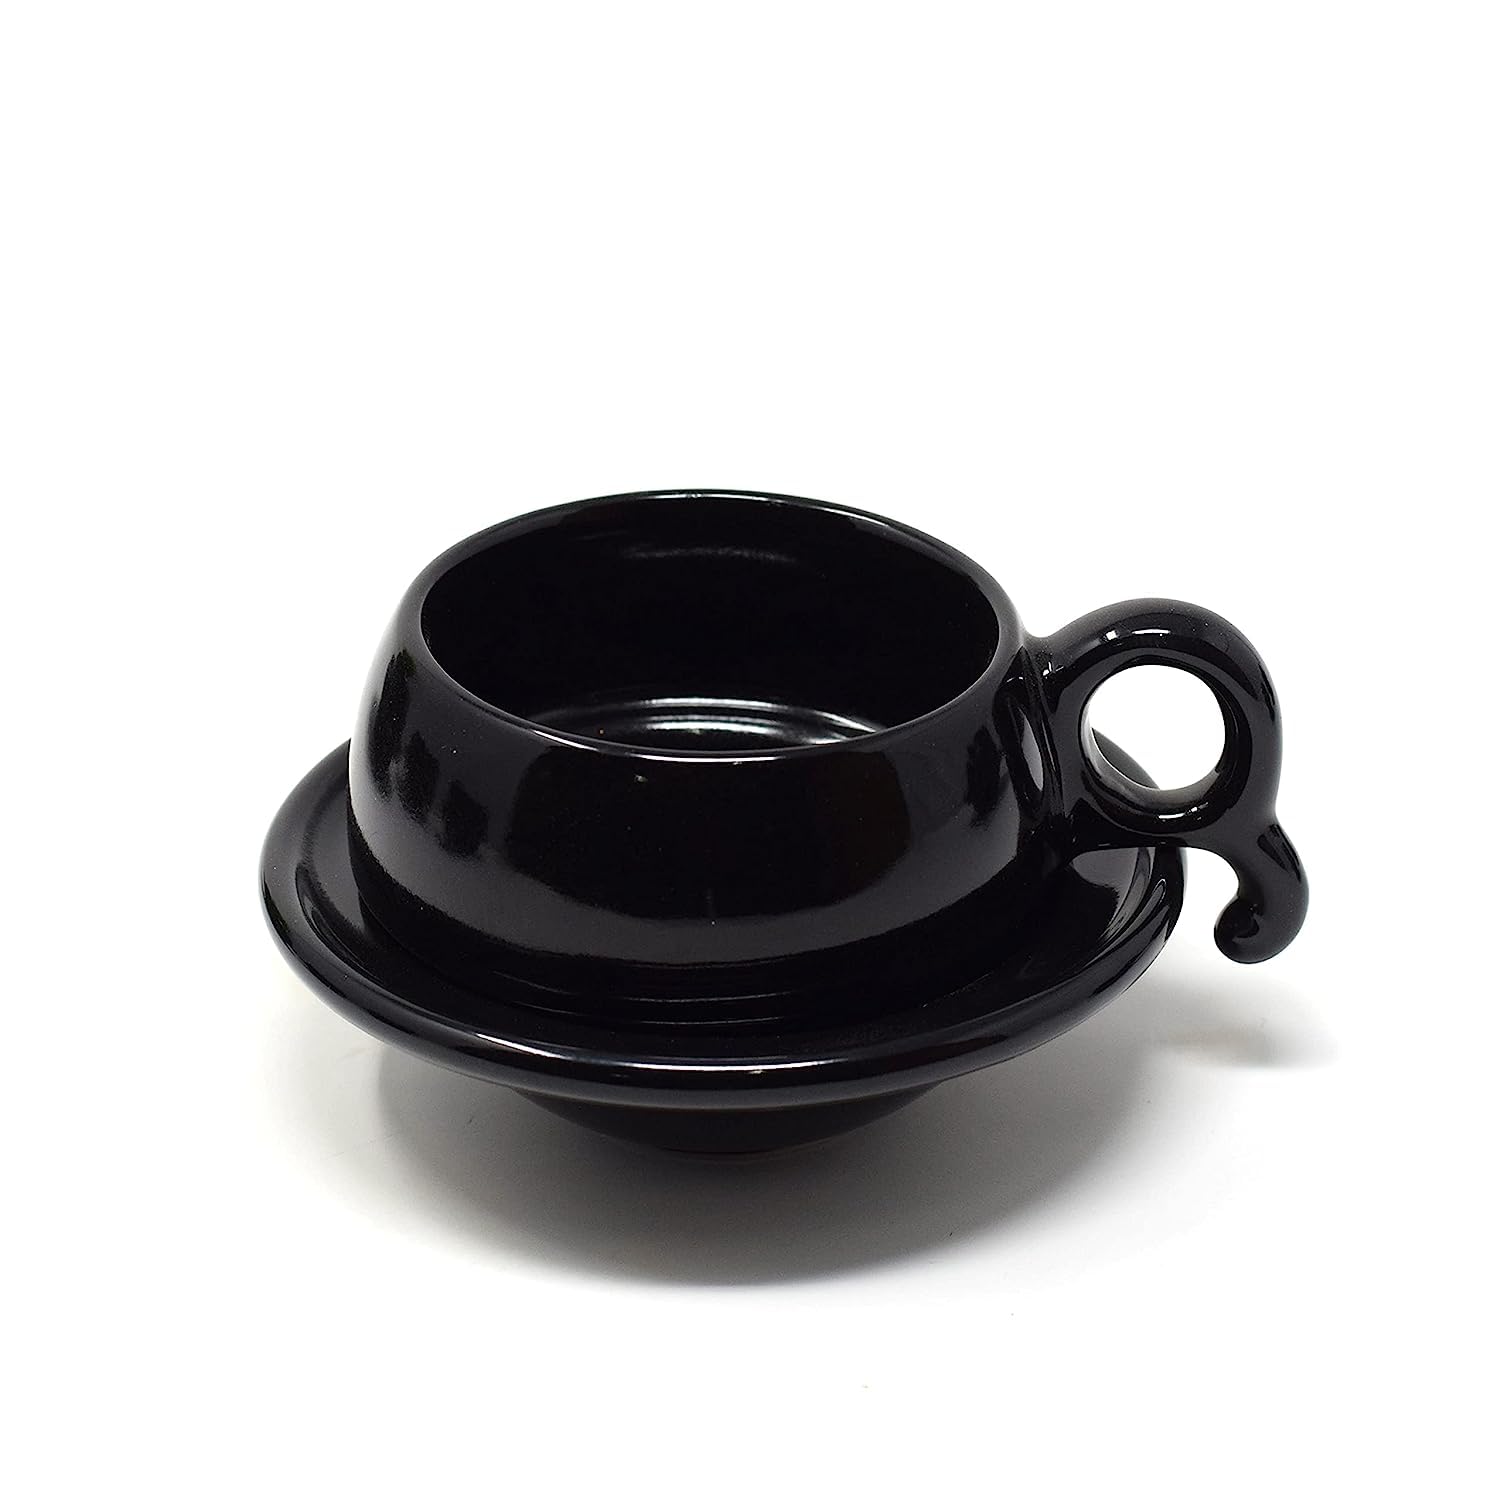 Merakrt Black Copper Pipe Coffee Mug Set- Handmade Ceramic Mugs for Te